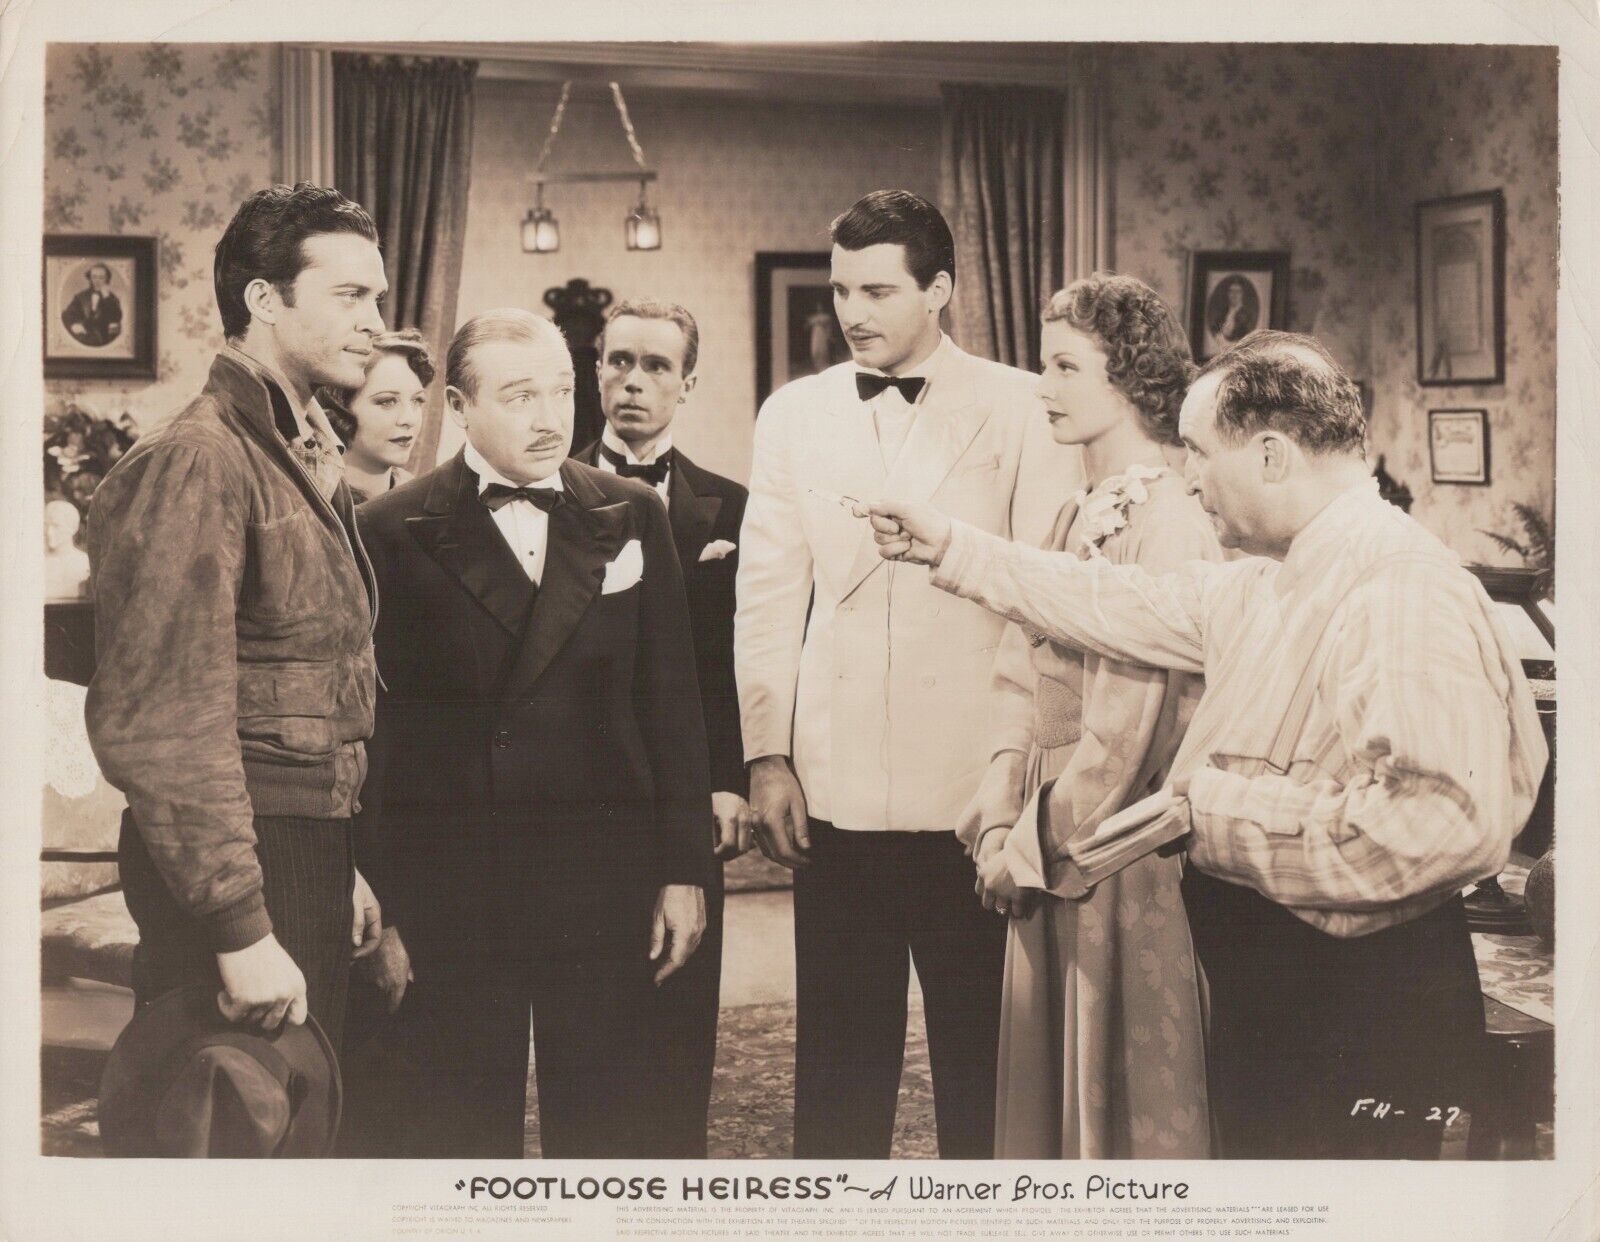 Ann Sheridan + William Hopper in The Footloose Heiress (1937) WB Photo K 135